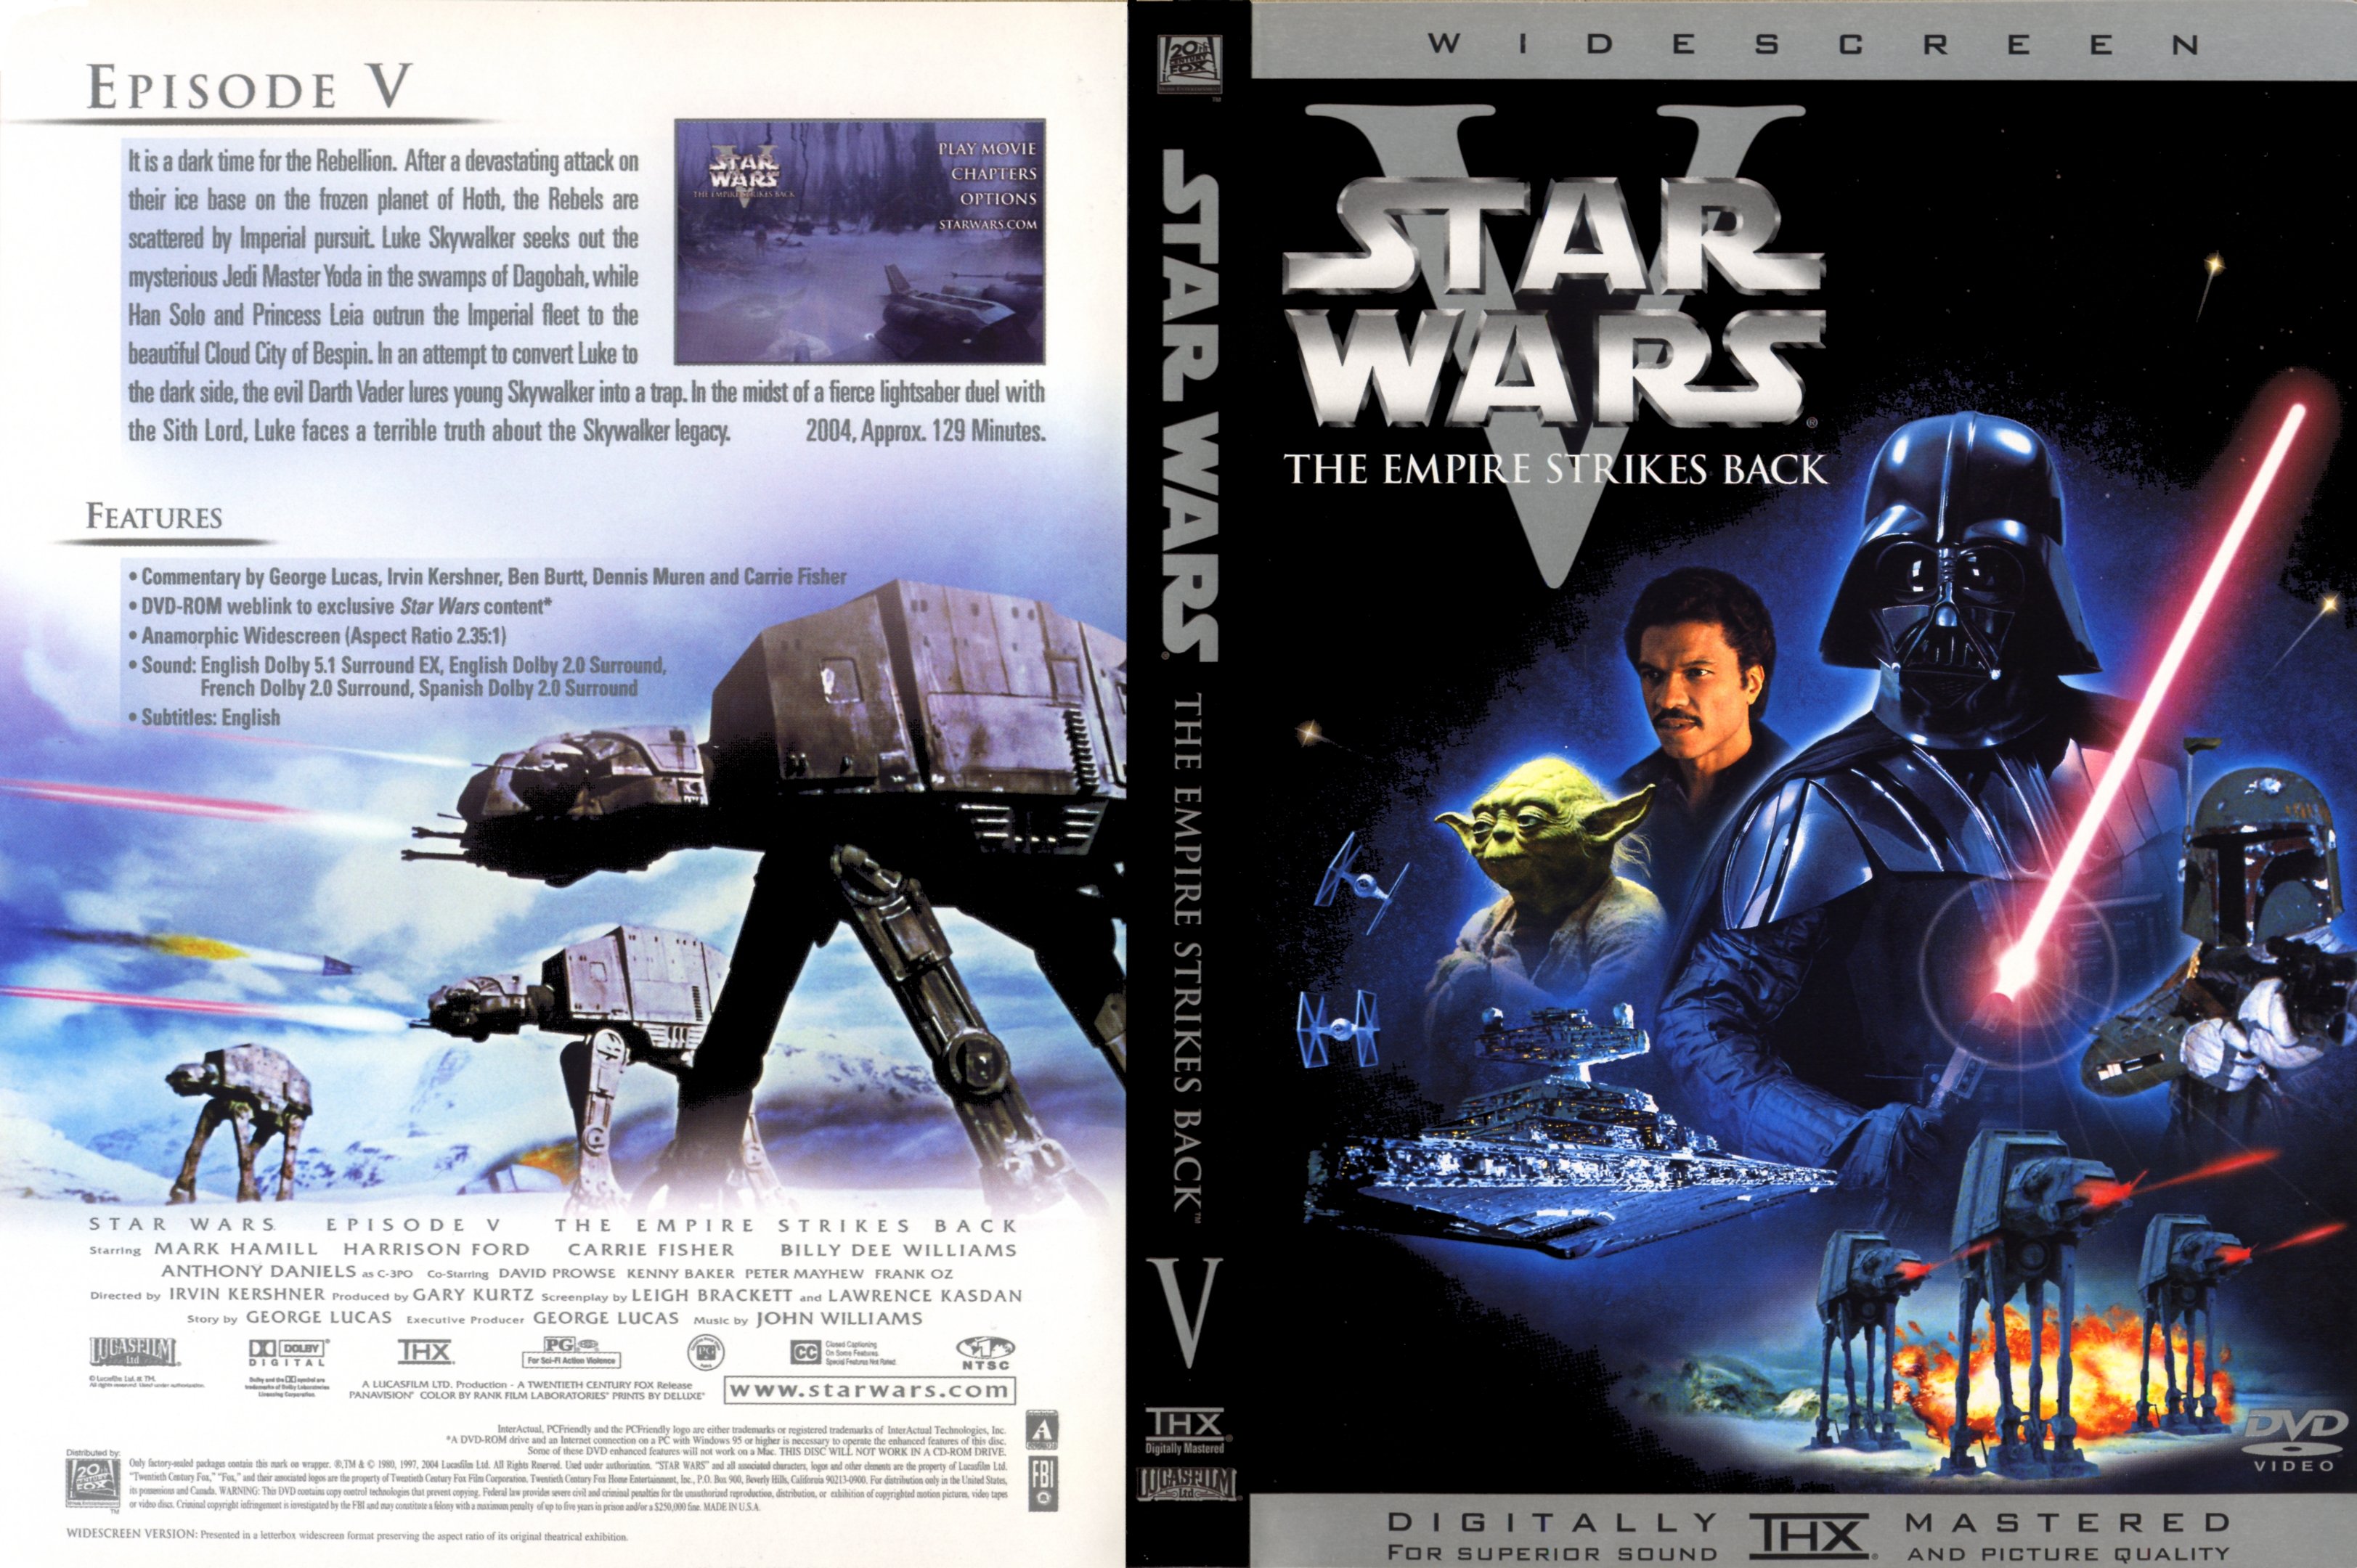 Star Wars Episode V: The Empire Strikes Back #16